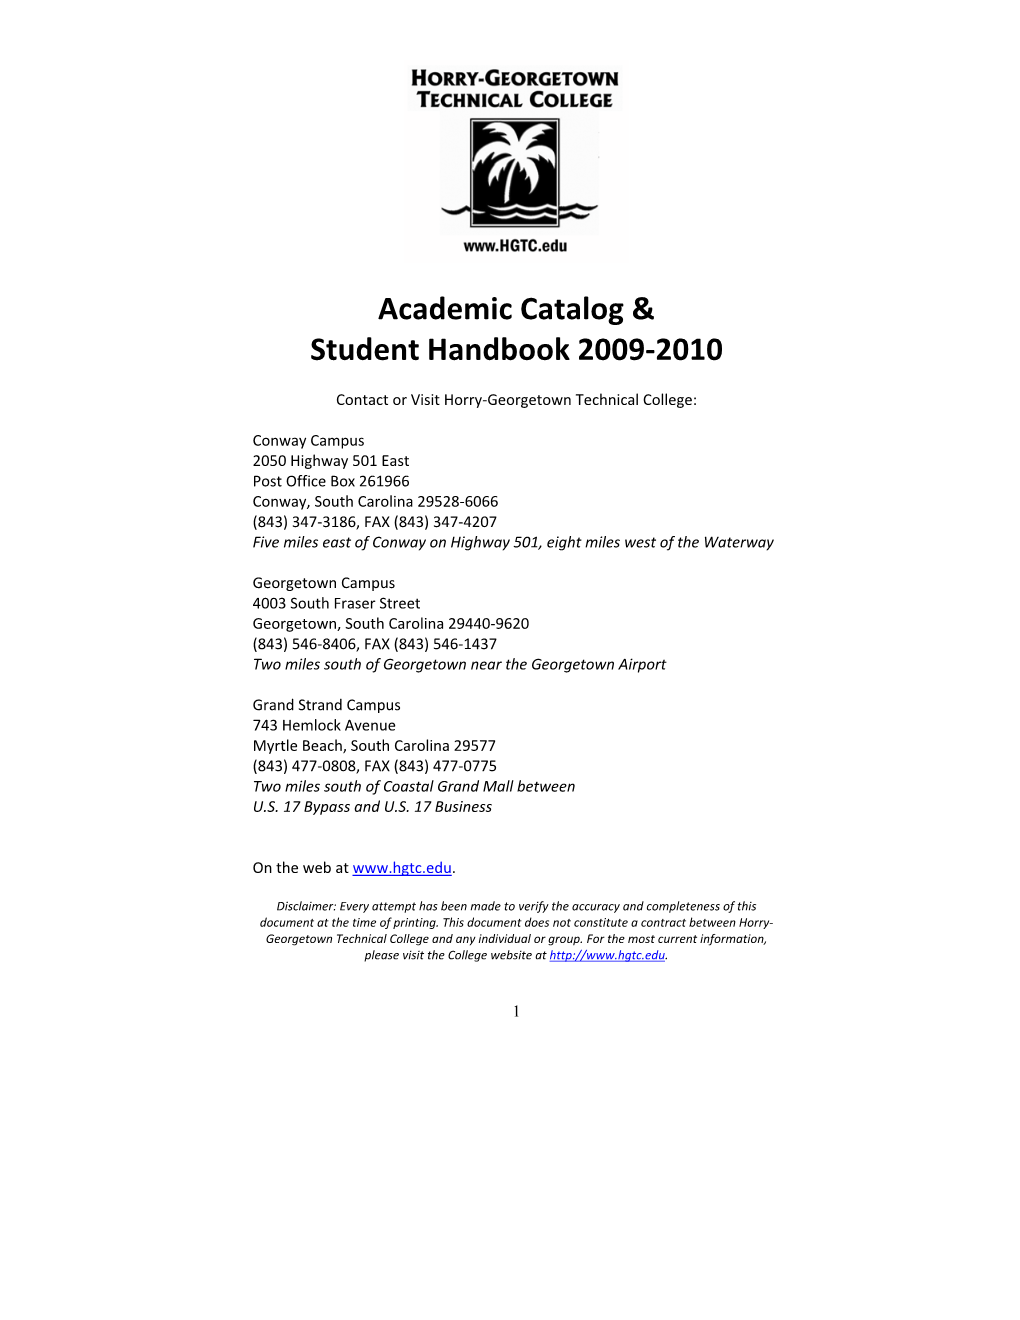 Academic Catalog & Student Handbook 2009-2010